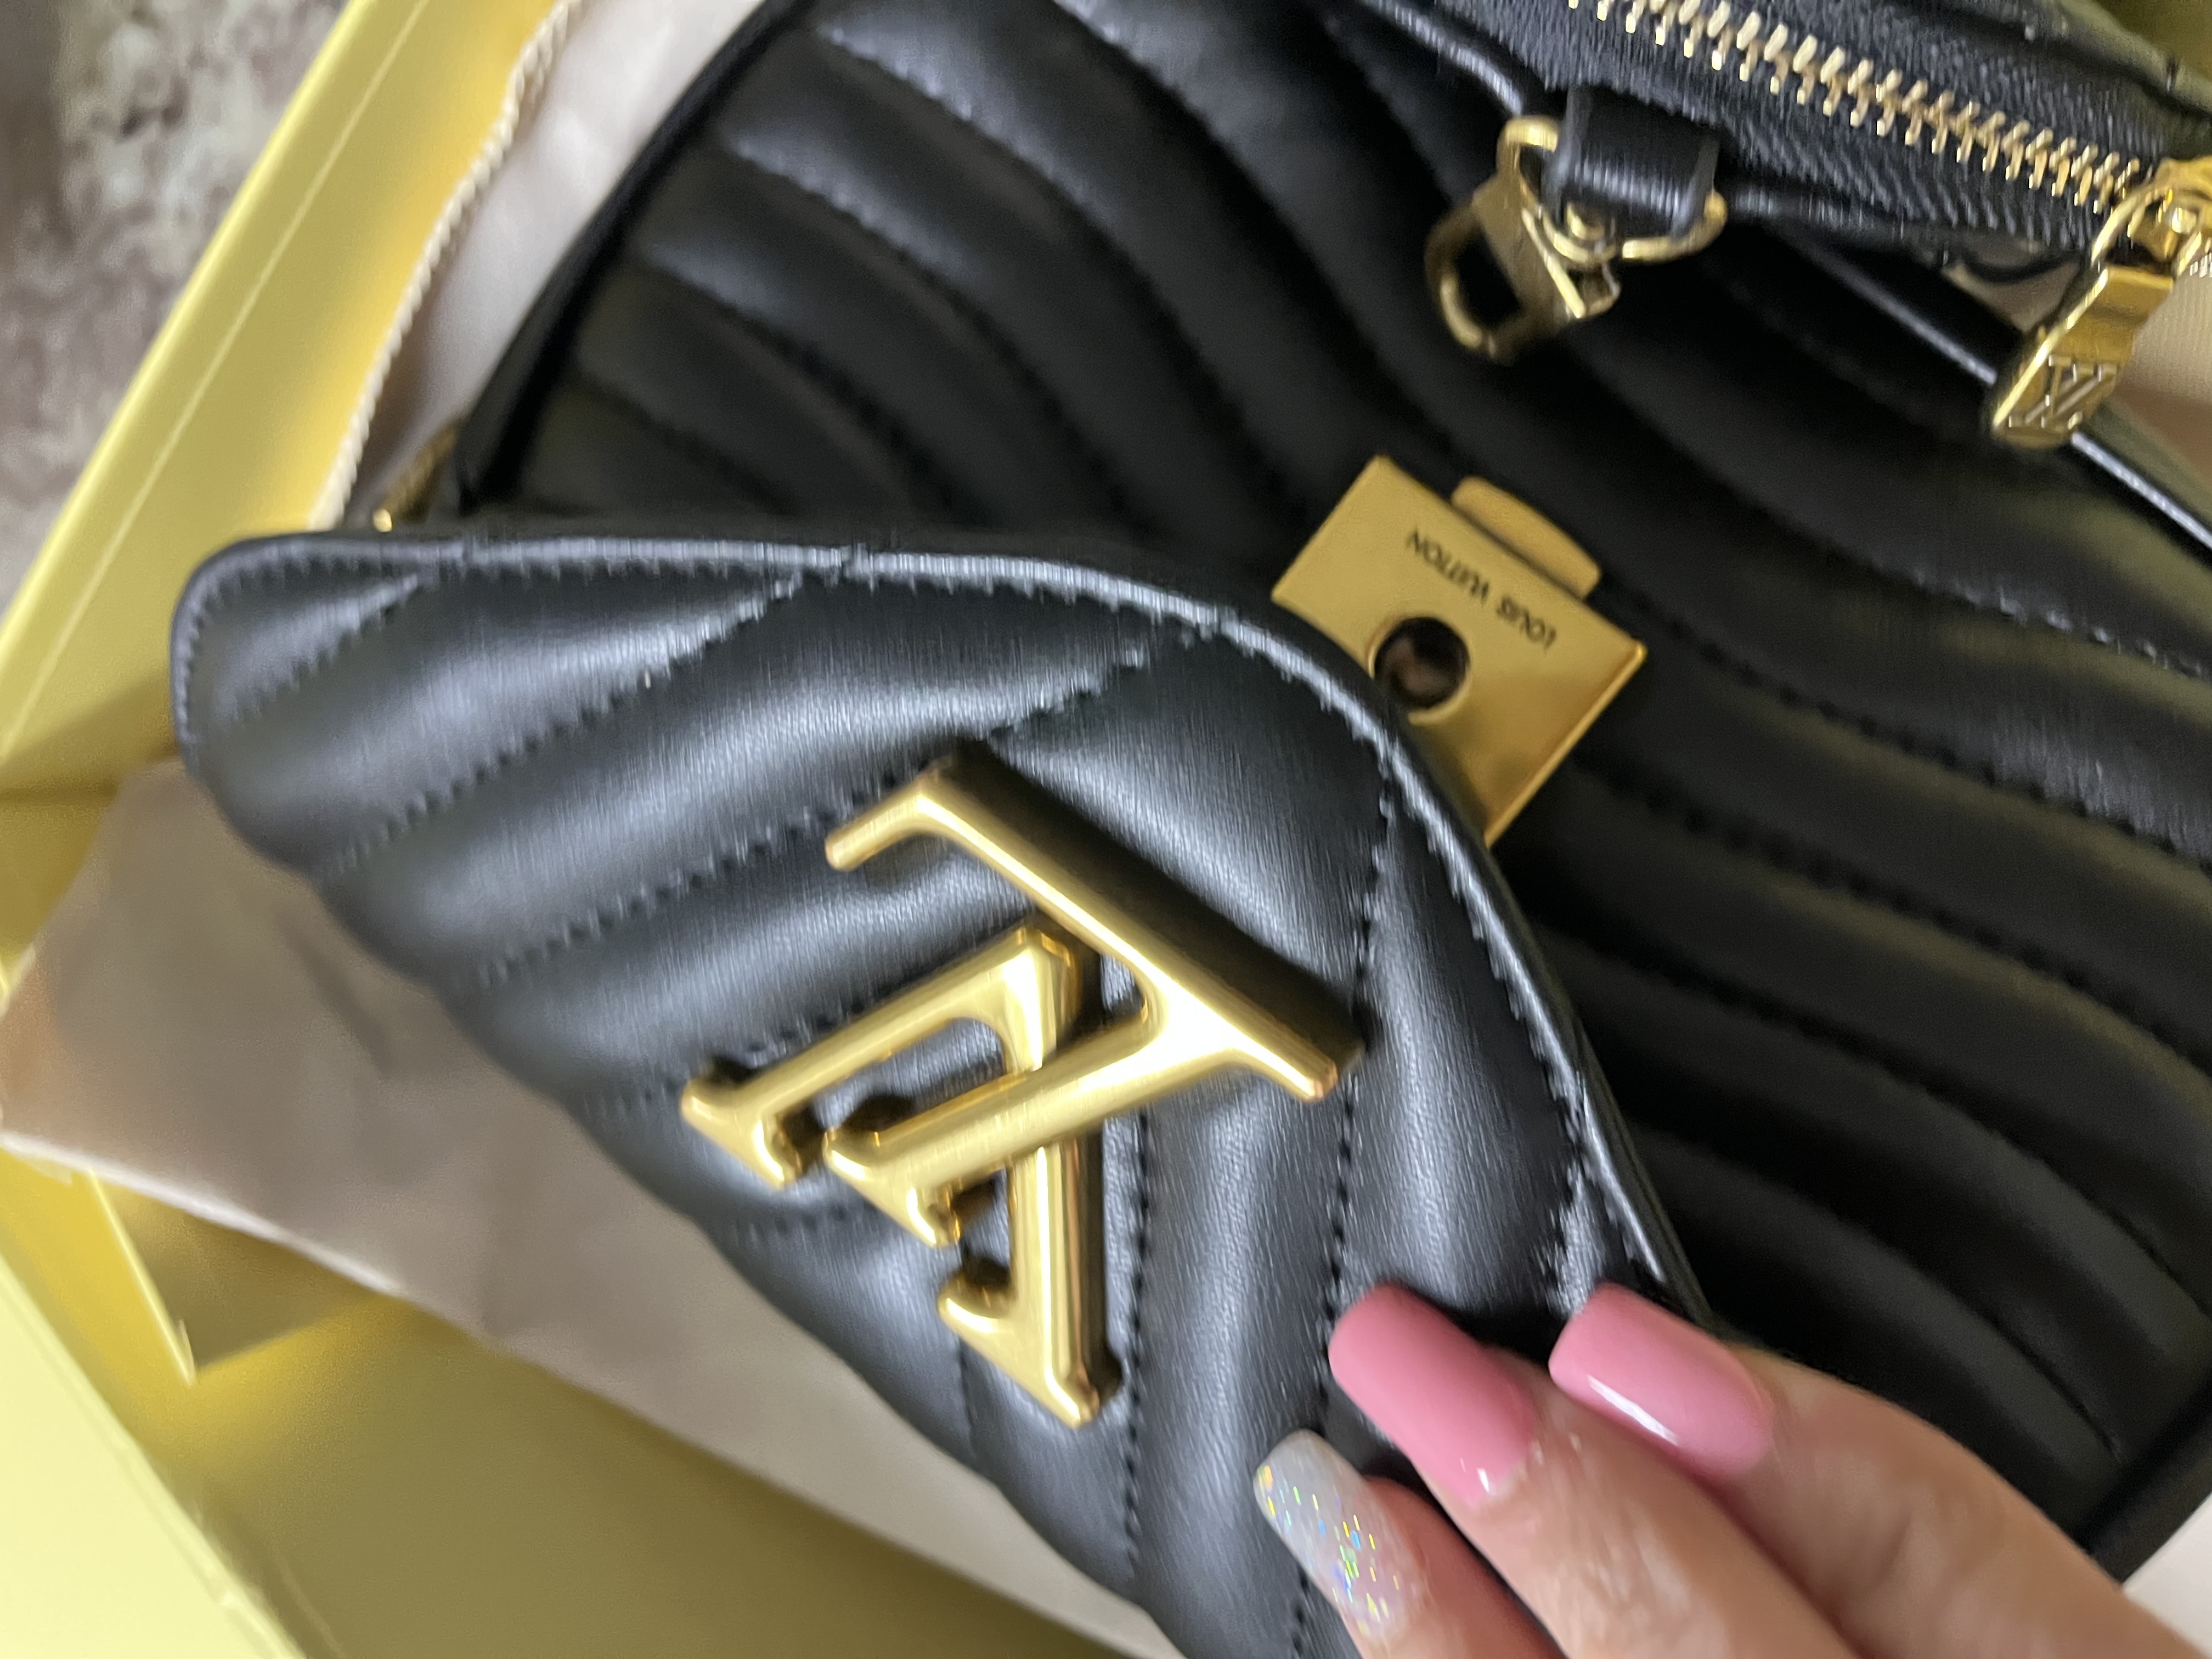 Louis Vuitton Croisette Discontinued: True or Not? - Jane Marvel